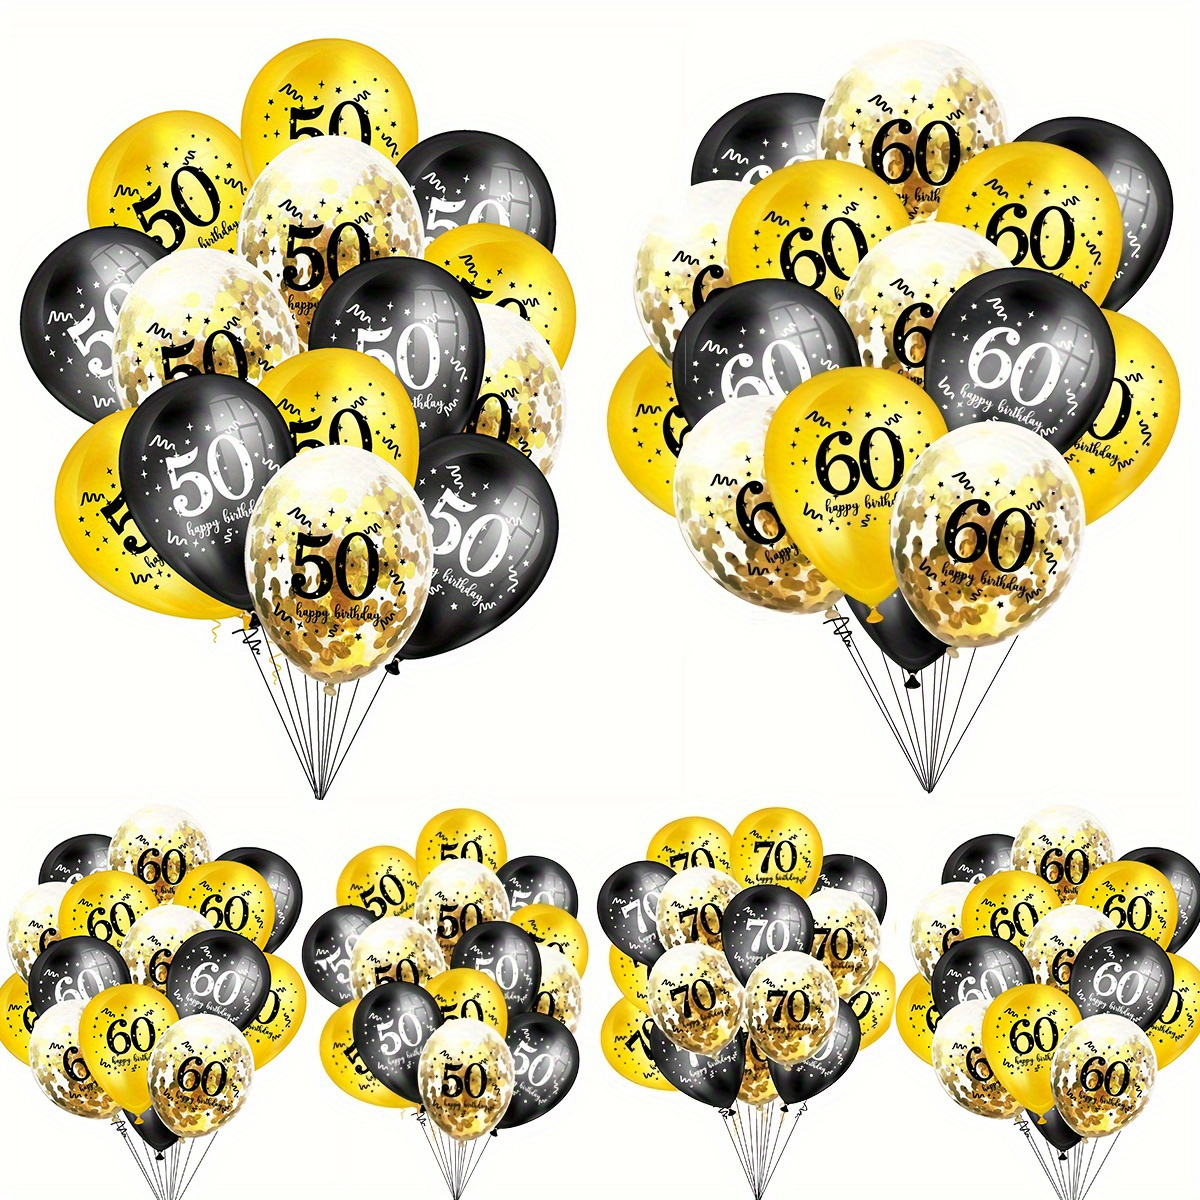 

20-piece Black & Metallic Balloon Set For Milestone Birthdays - Ideal For Anniversaries & Celebrations, Latex Material